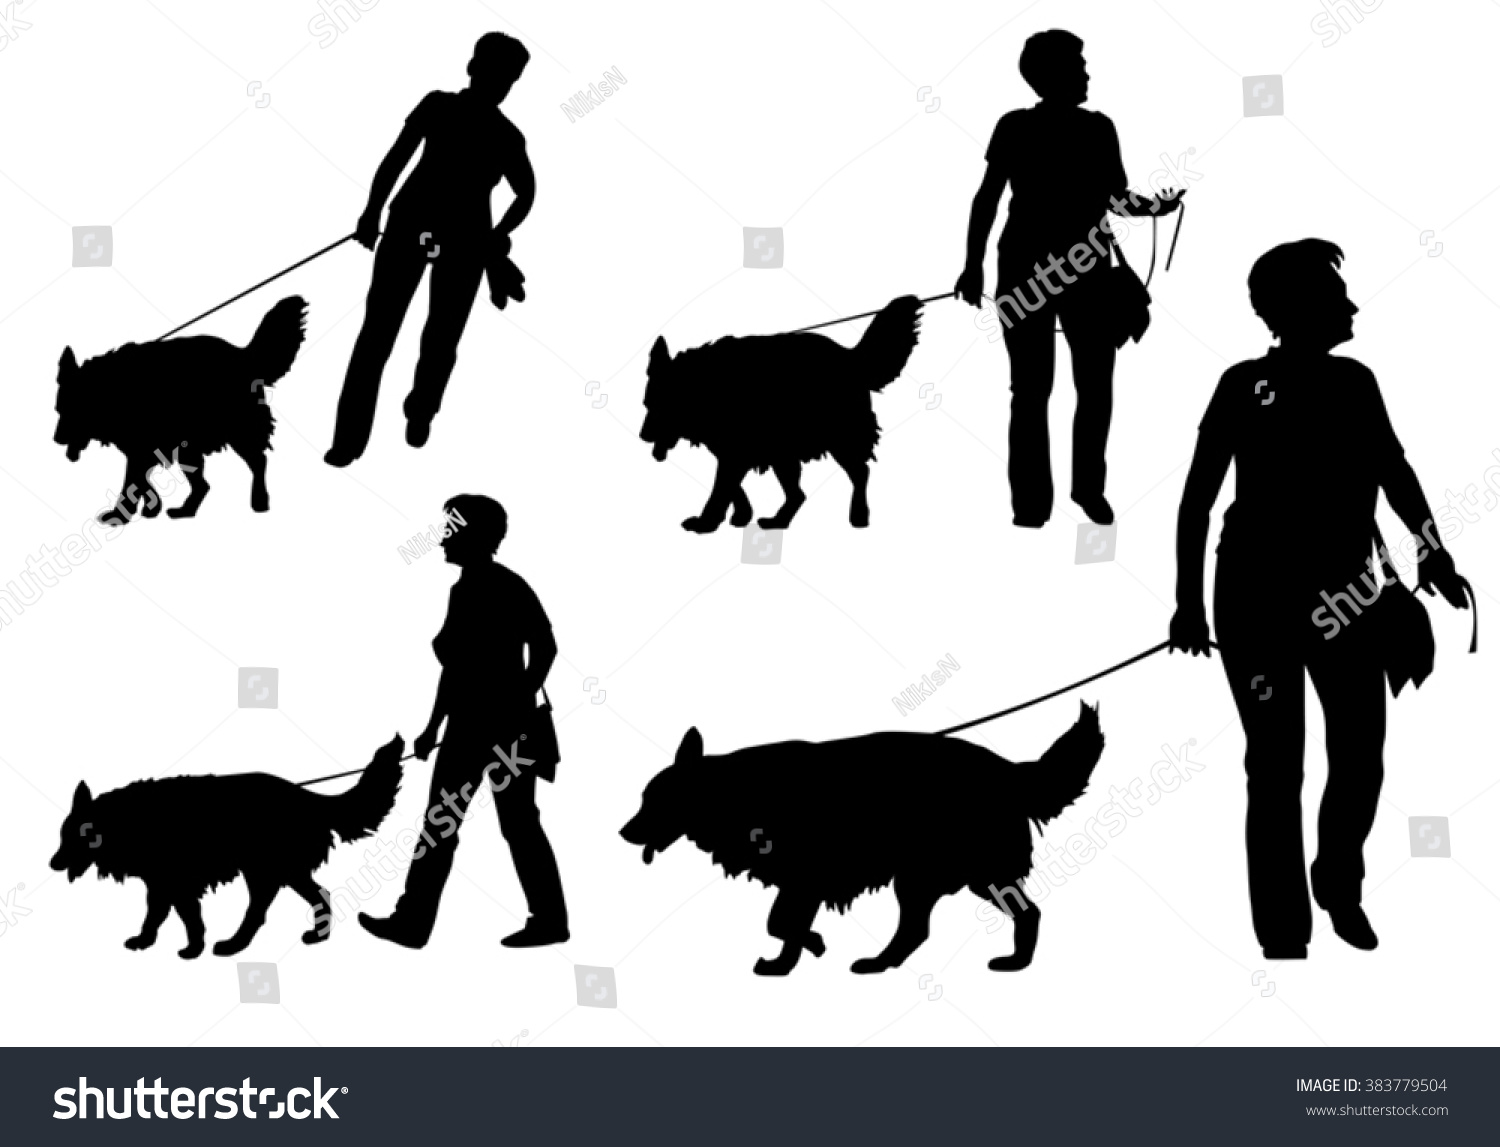 Details about   Playmobil animal WOMAN W/ BLACK HAIR WALKING BLACK & WHITE DOG ON LEASH